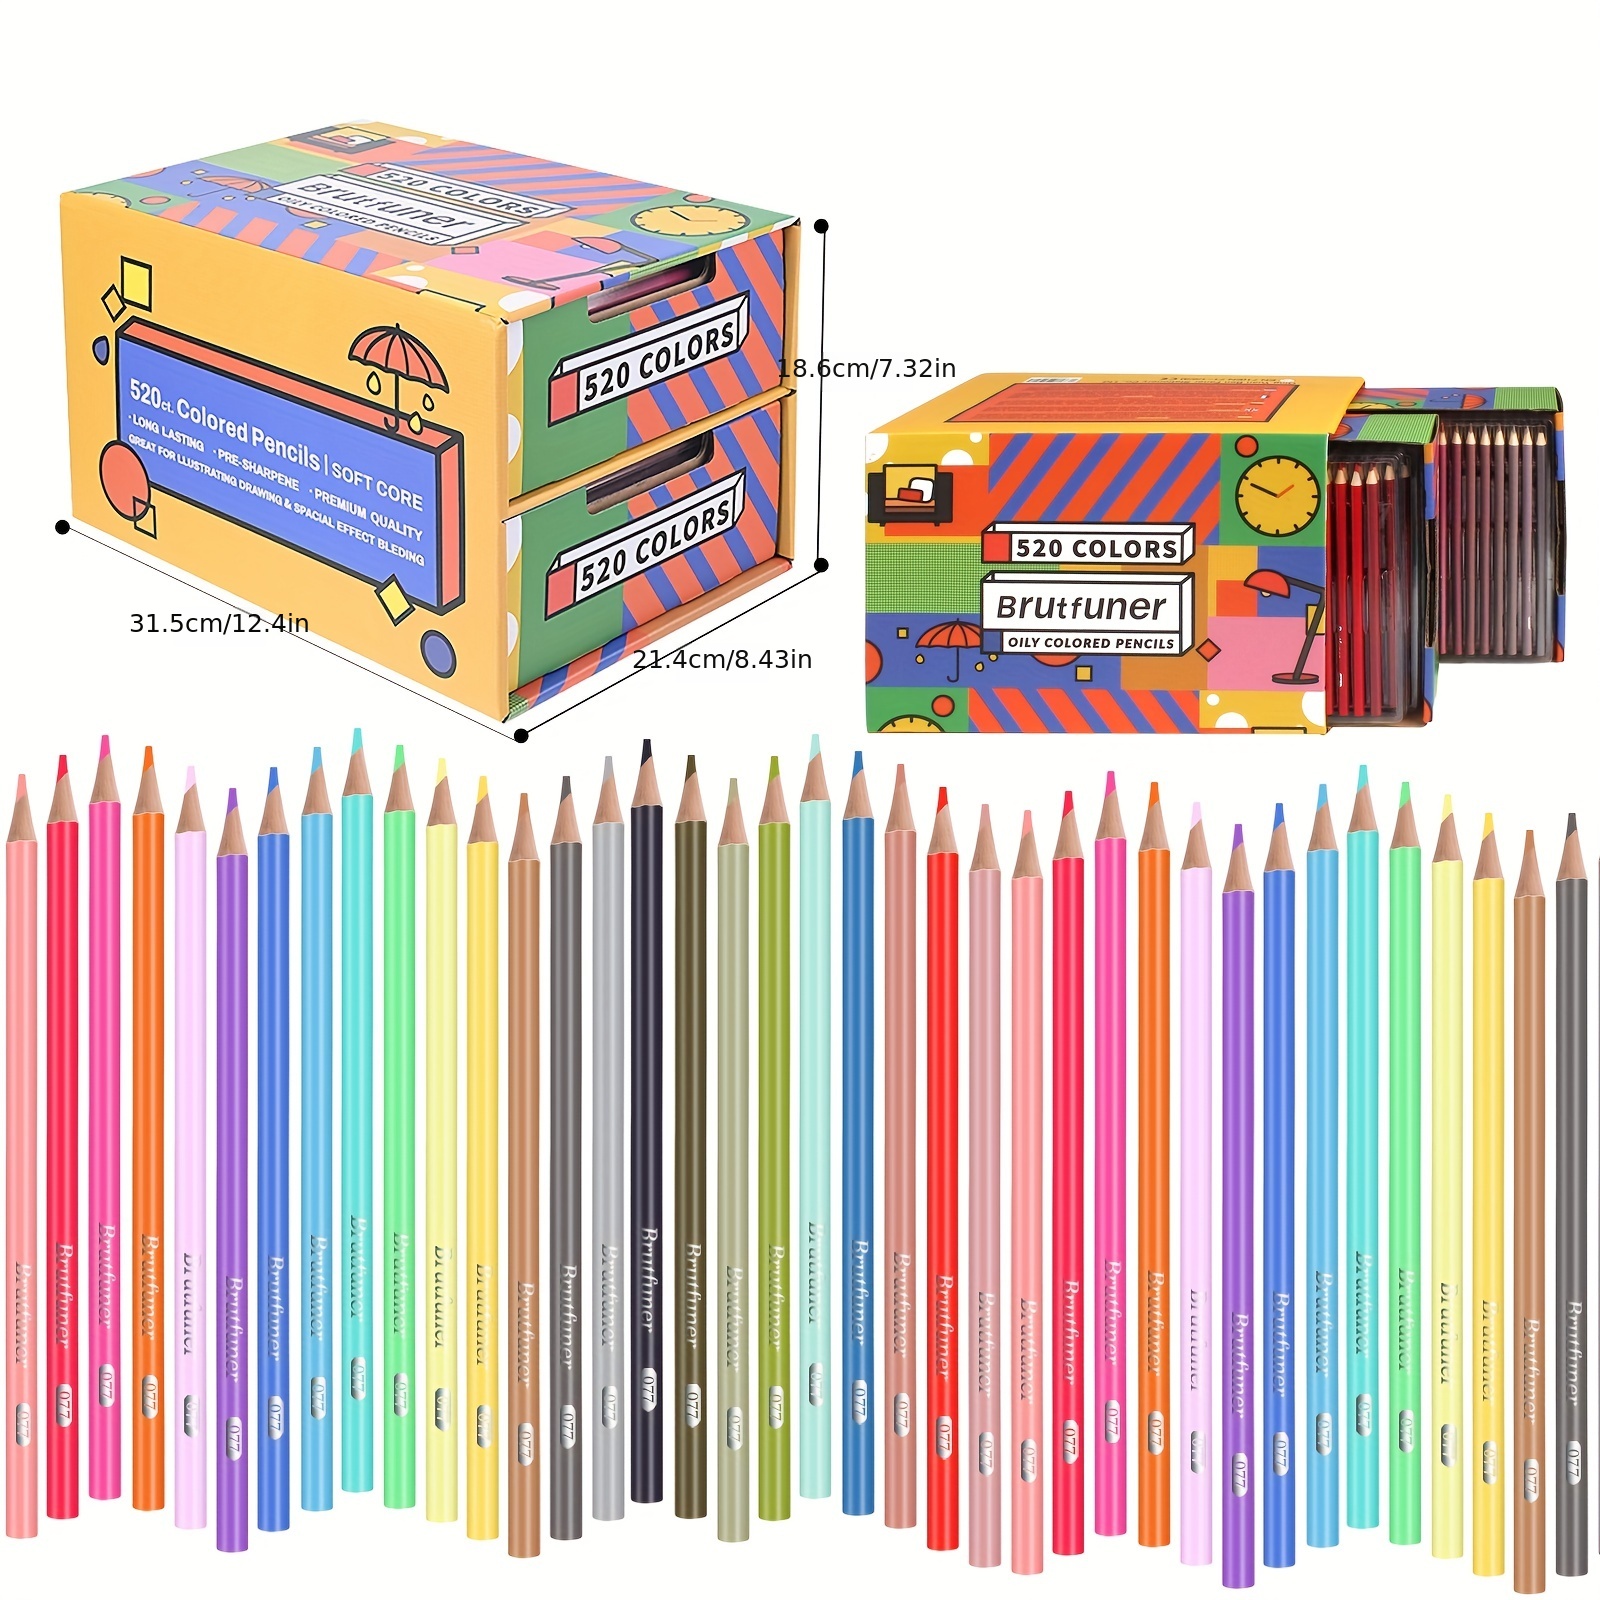 Colored Pencil 520 Colors, Oil-based Colored Pencil